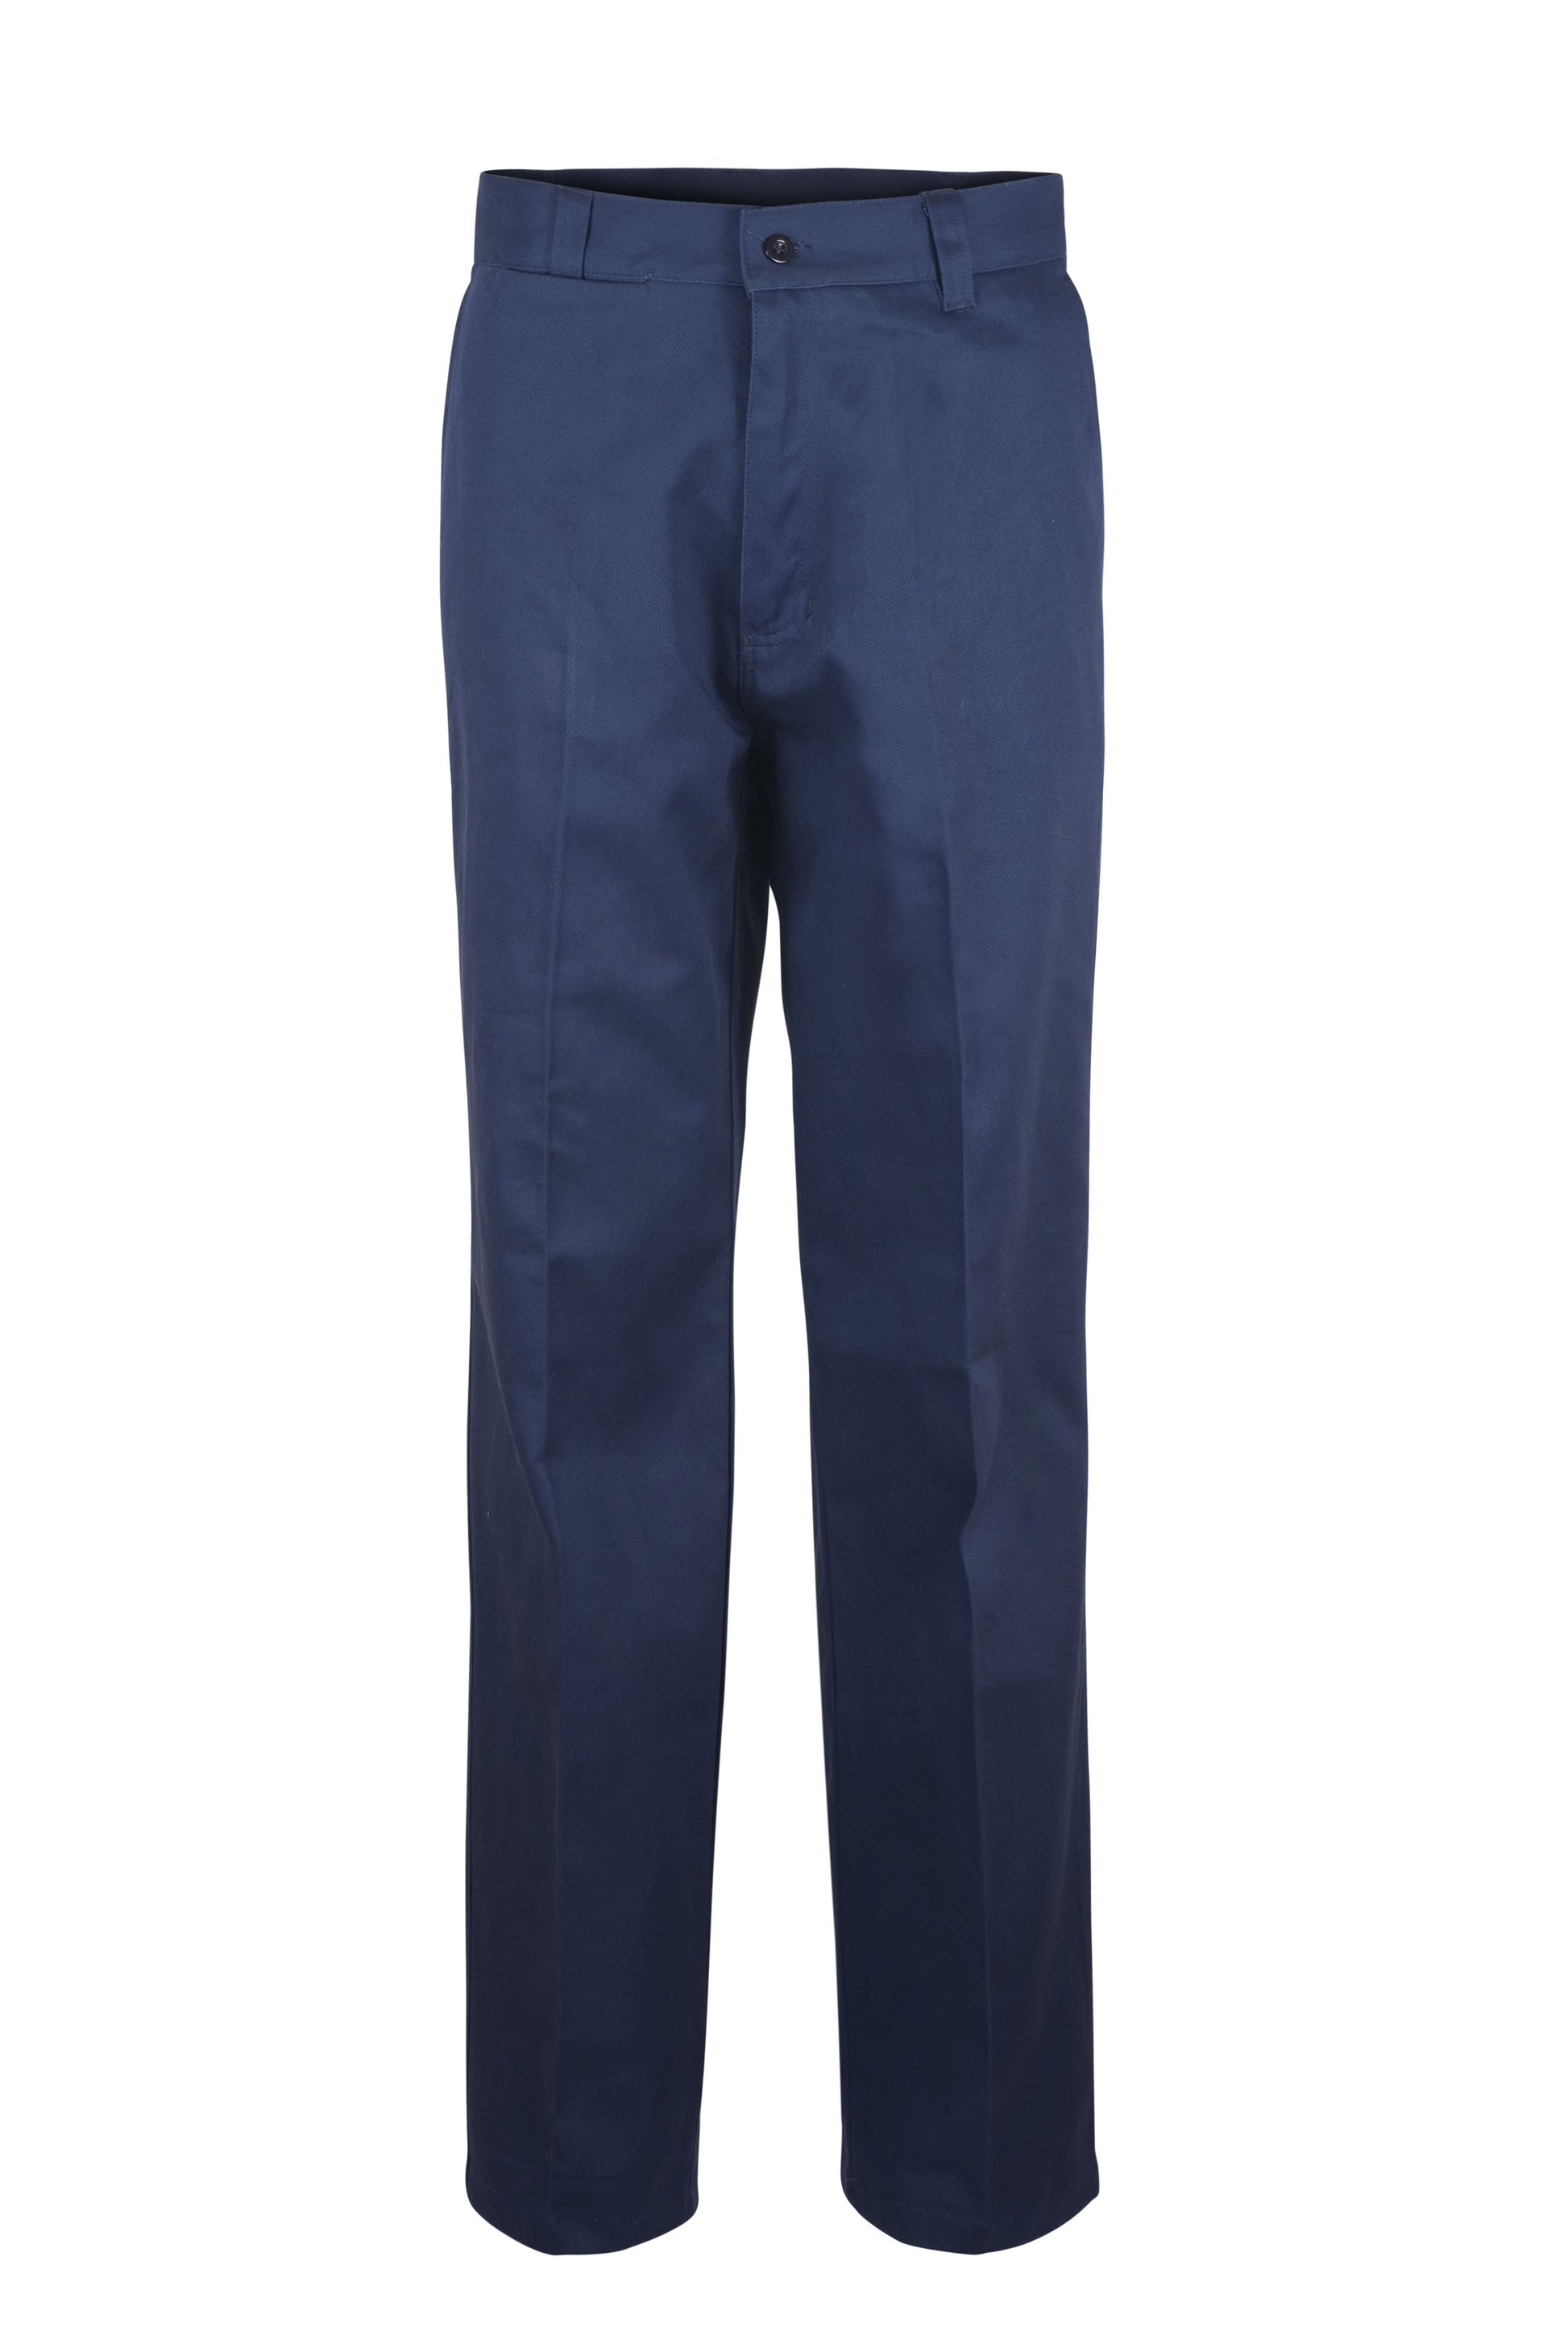 WORKCRAFT WP3038 Flat Front Cotton Trouser - Star Uniforms Australia